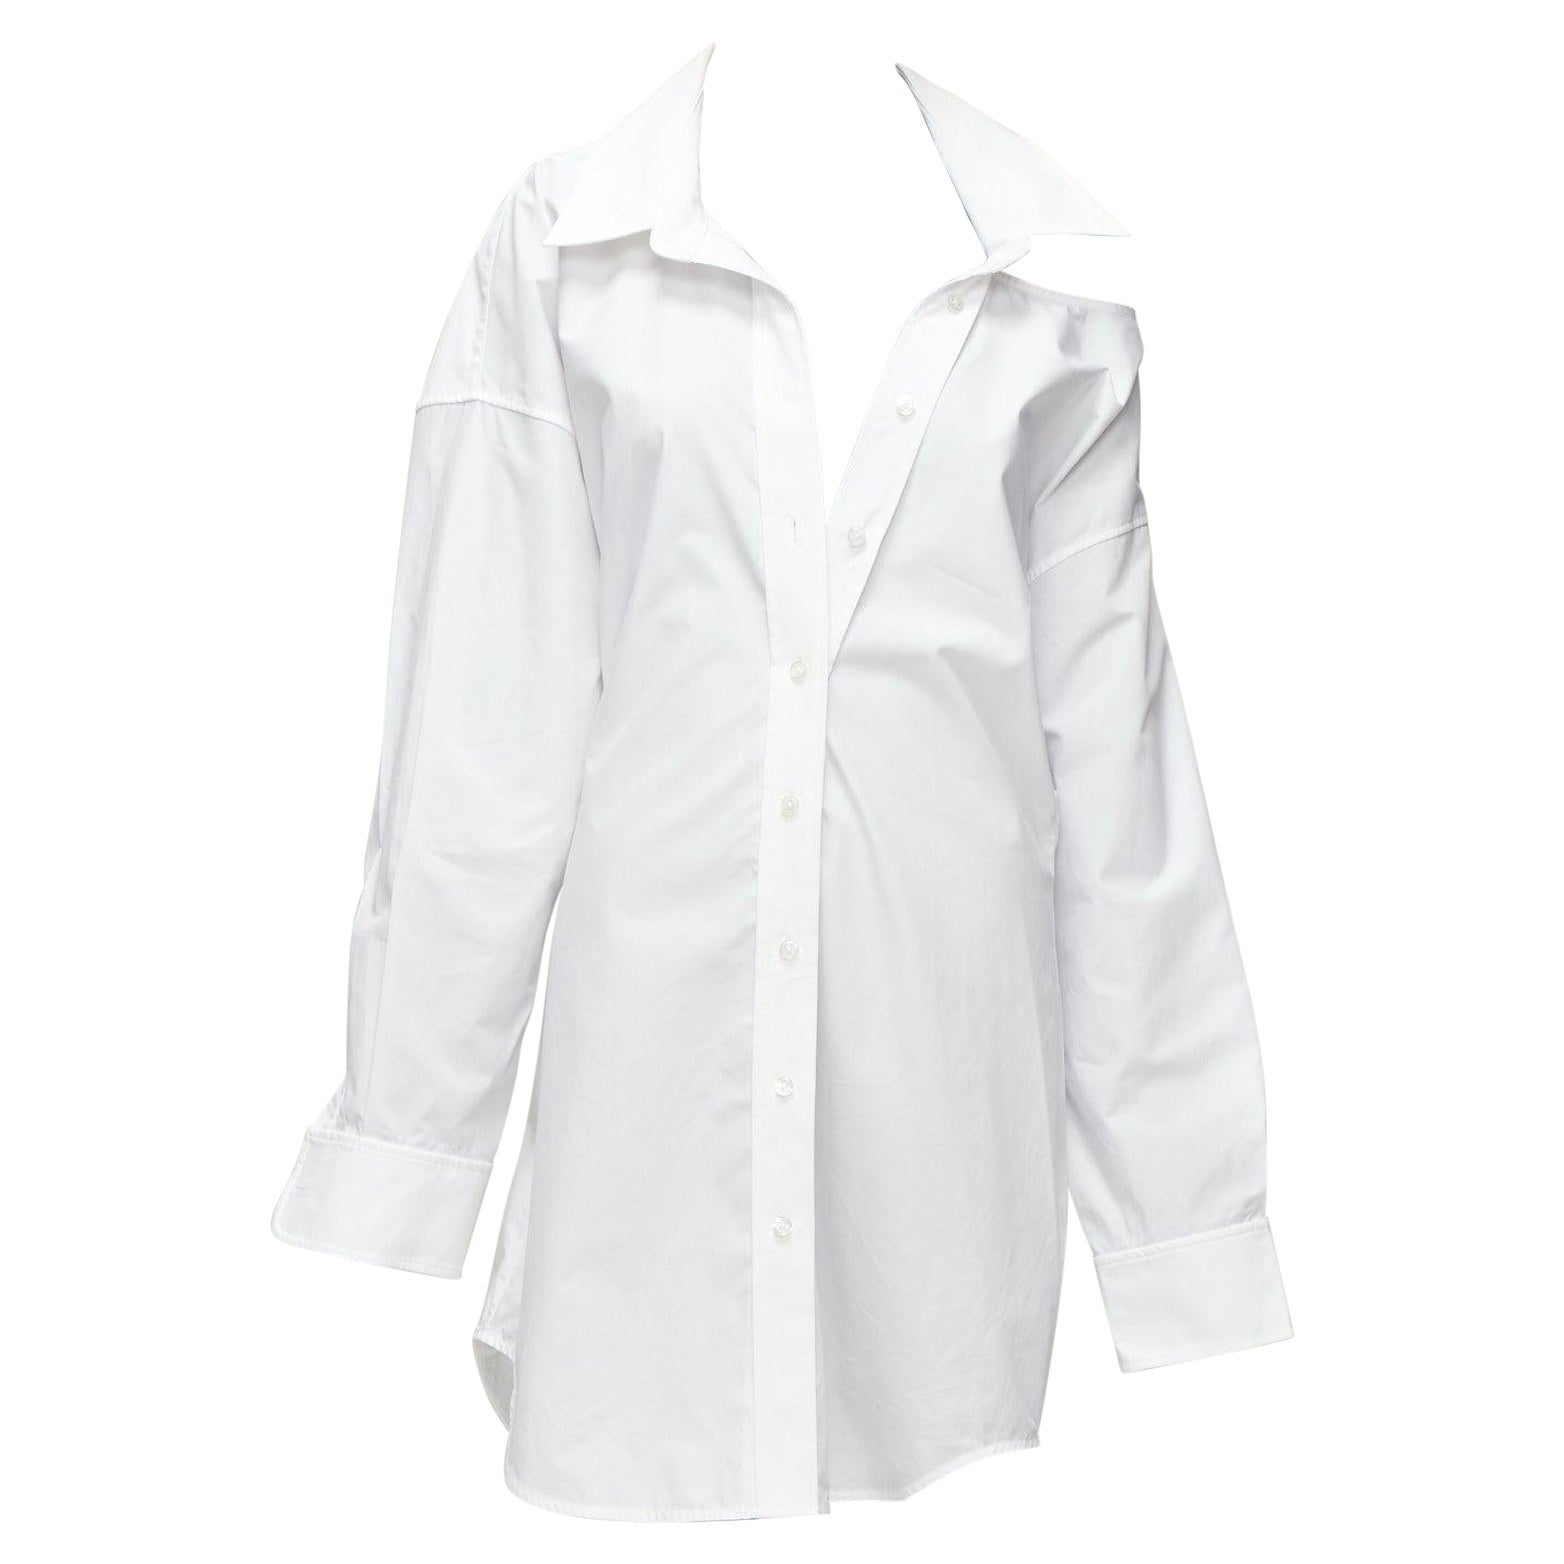 ALEXANDER WANG white cotton cut out shoulder deconstructed shirt dress US8 L For Sale